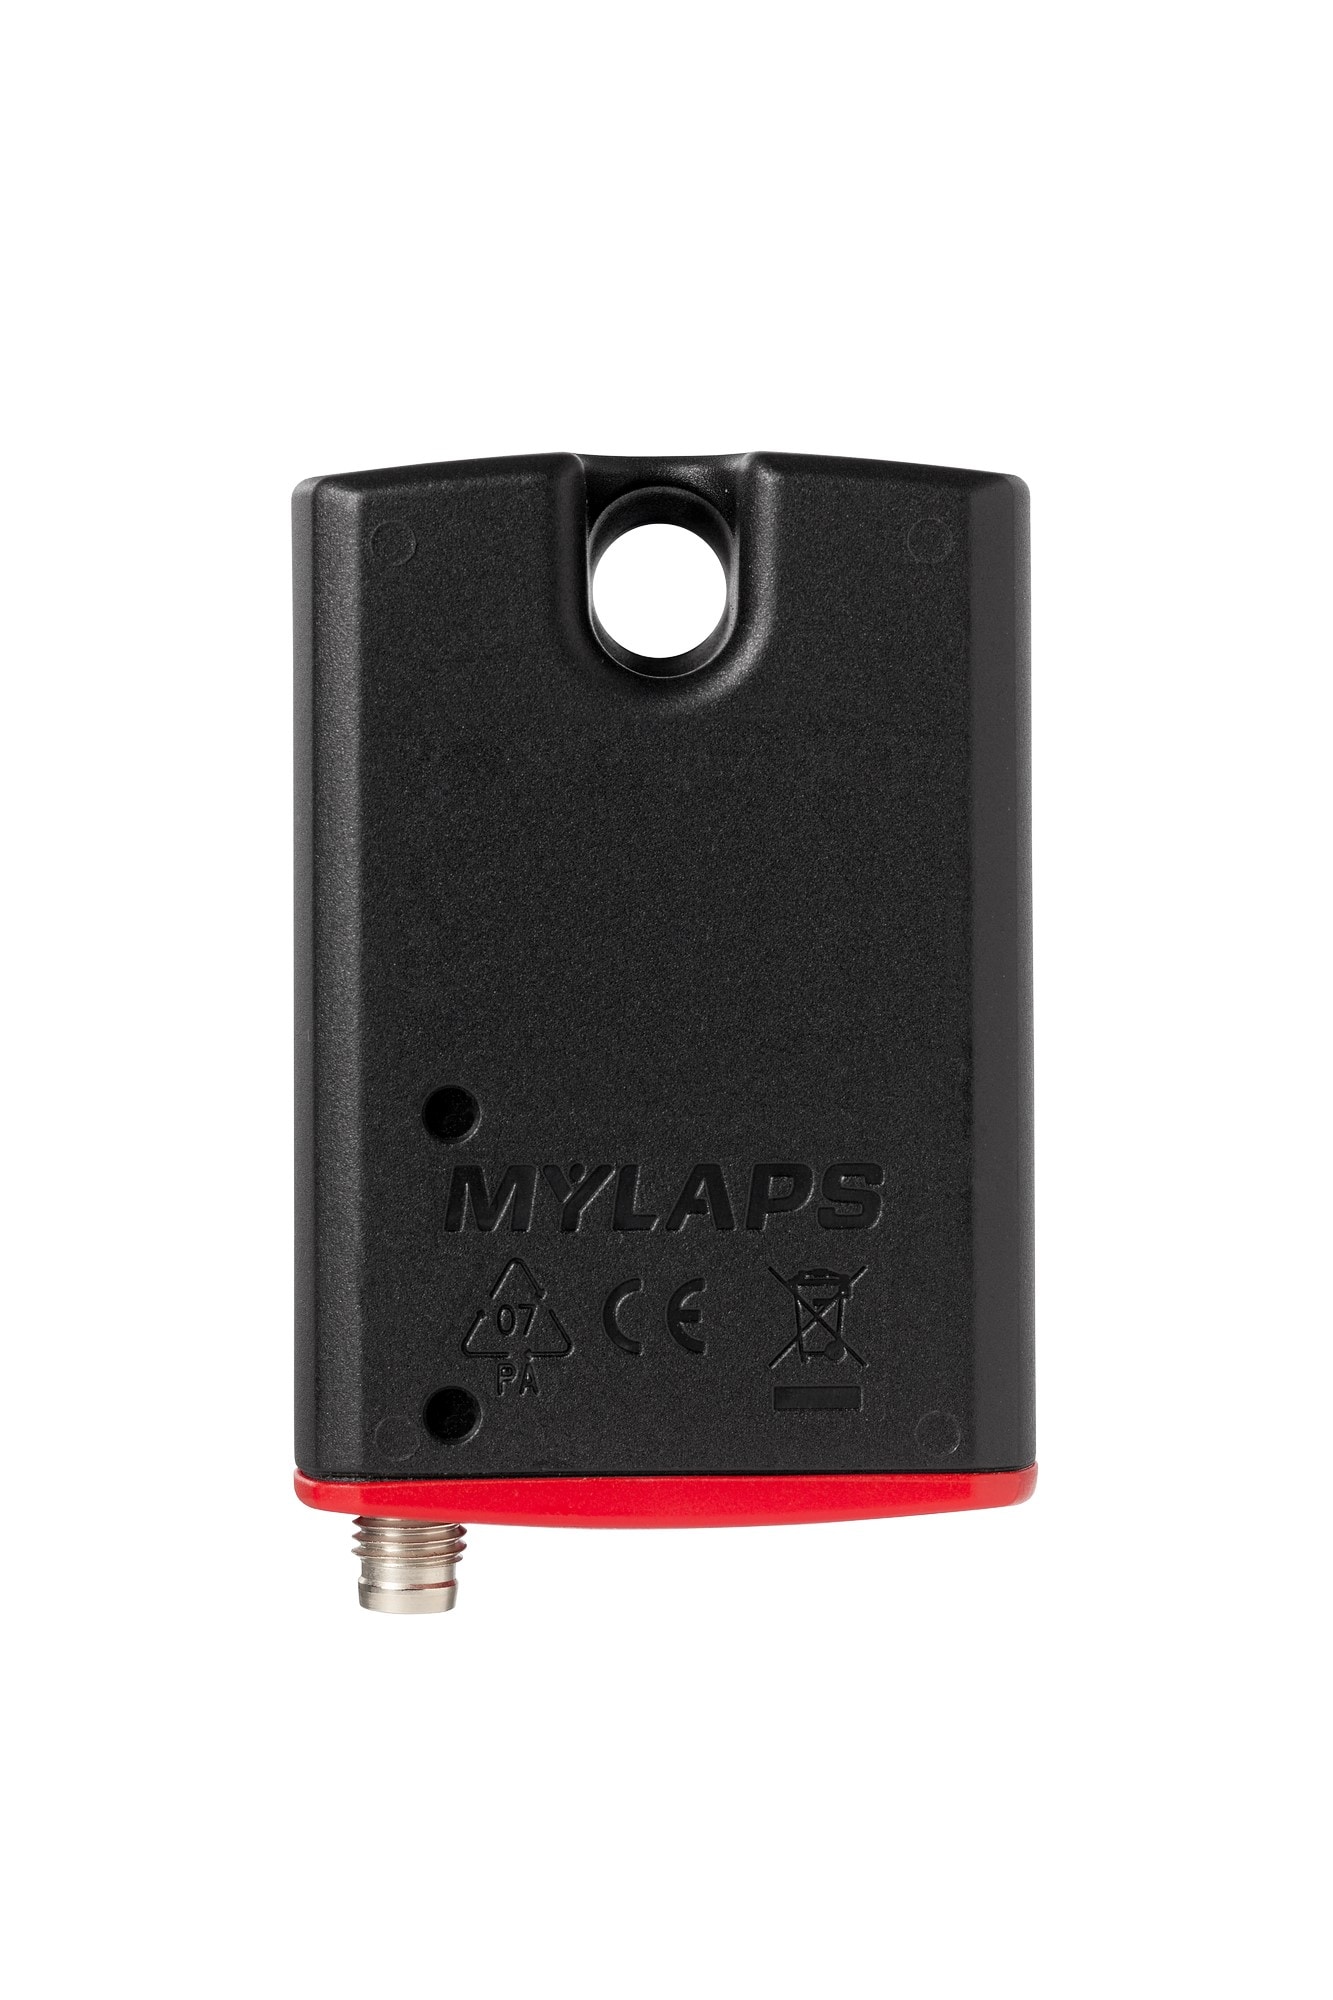 Transponder MyLaps TR2 Car/MC Direct Power 1 year